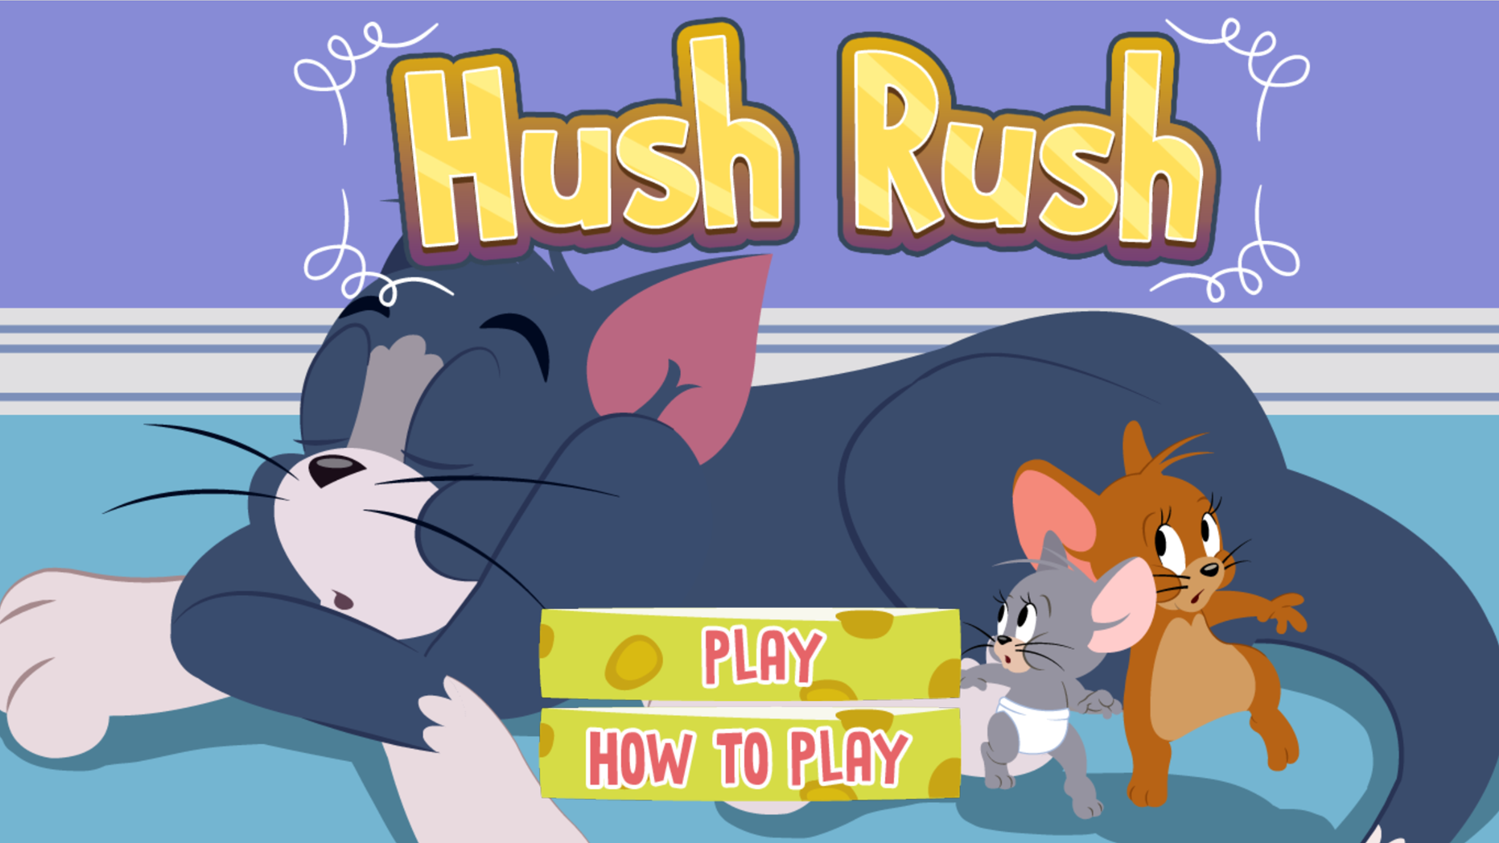 Tom and Jerry Hush Rush Welcome Screen Screenshot.